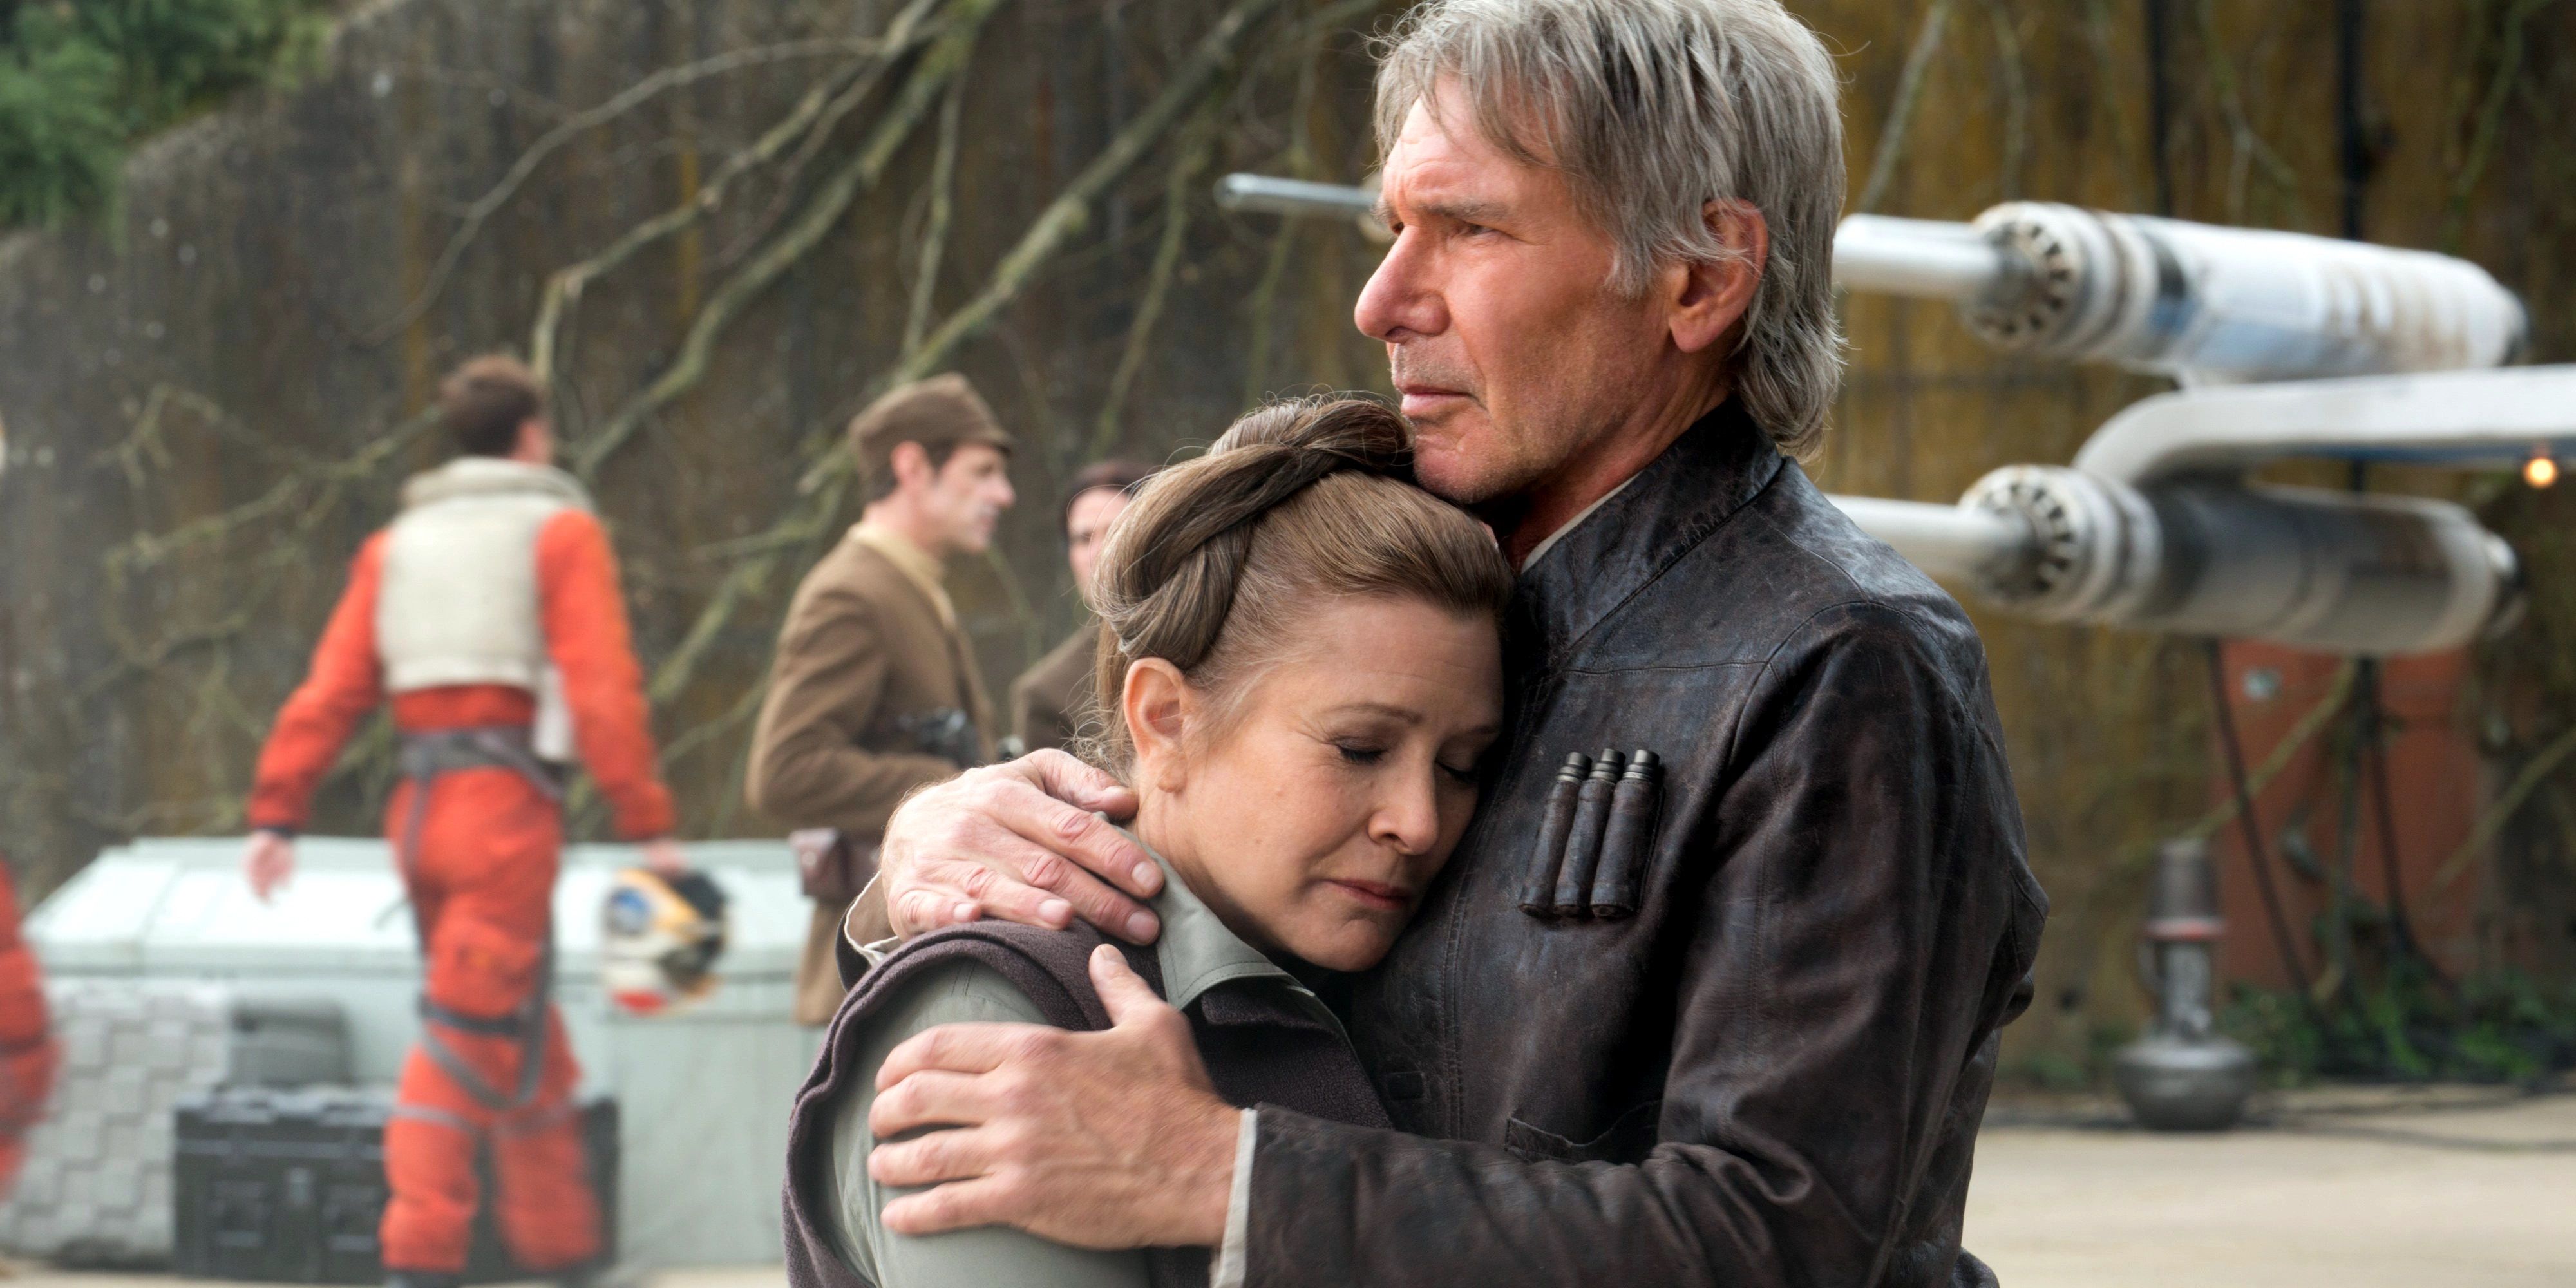 Han and Leia hug in The Force Awakens